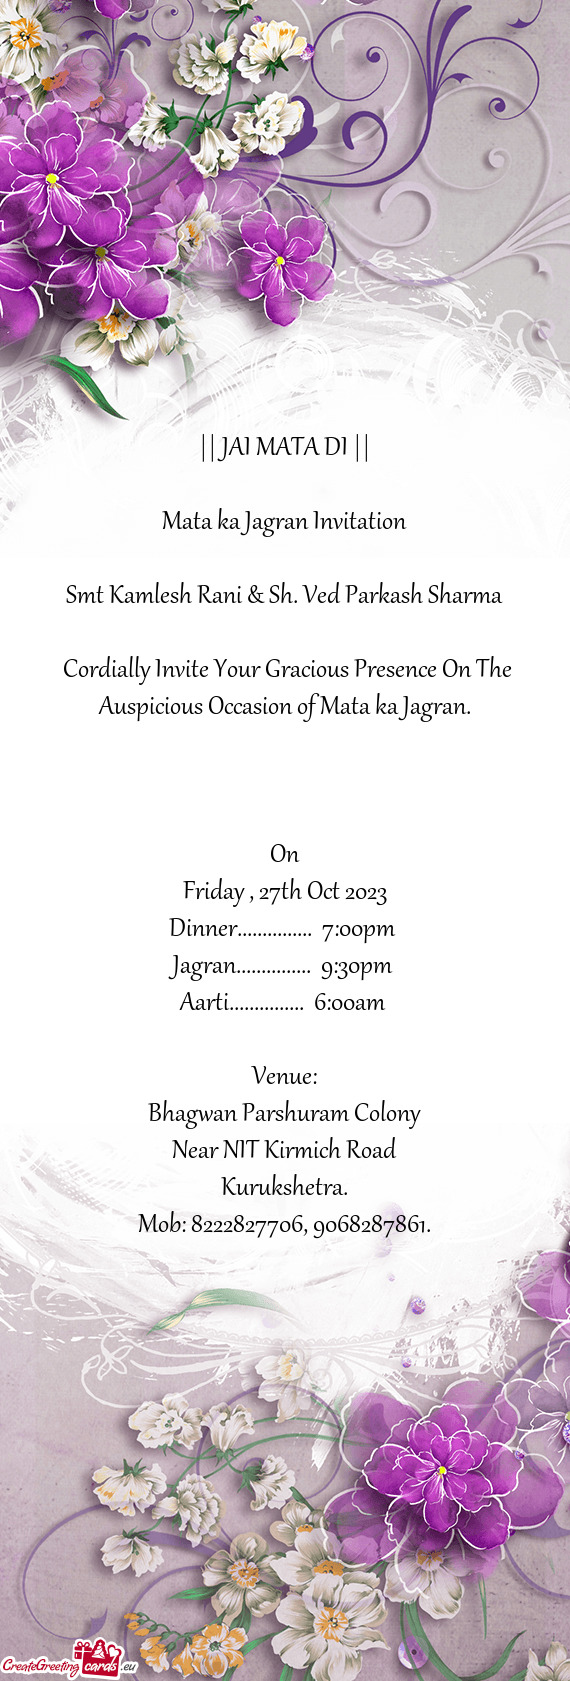 Cordially Invite Your Gracious Presence On The Auspicious Occasion of Mata ka Jagran